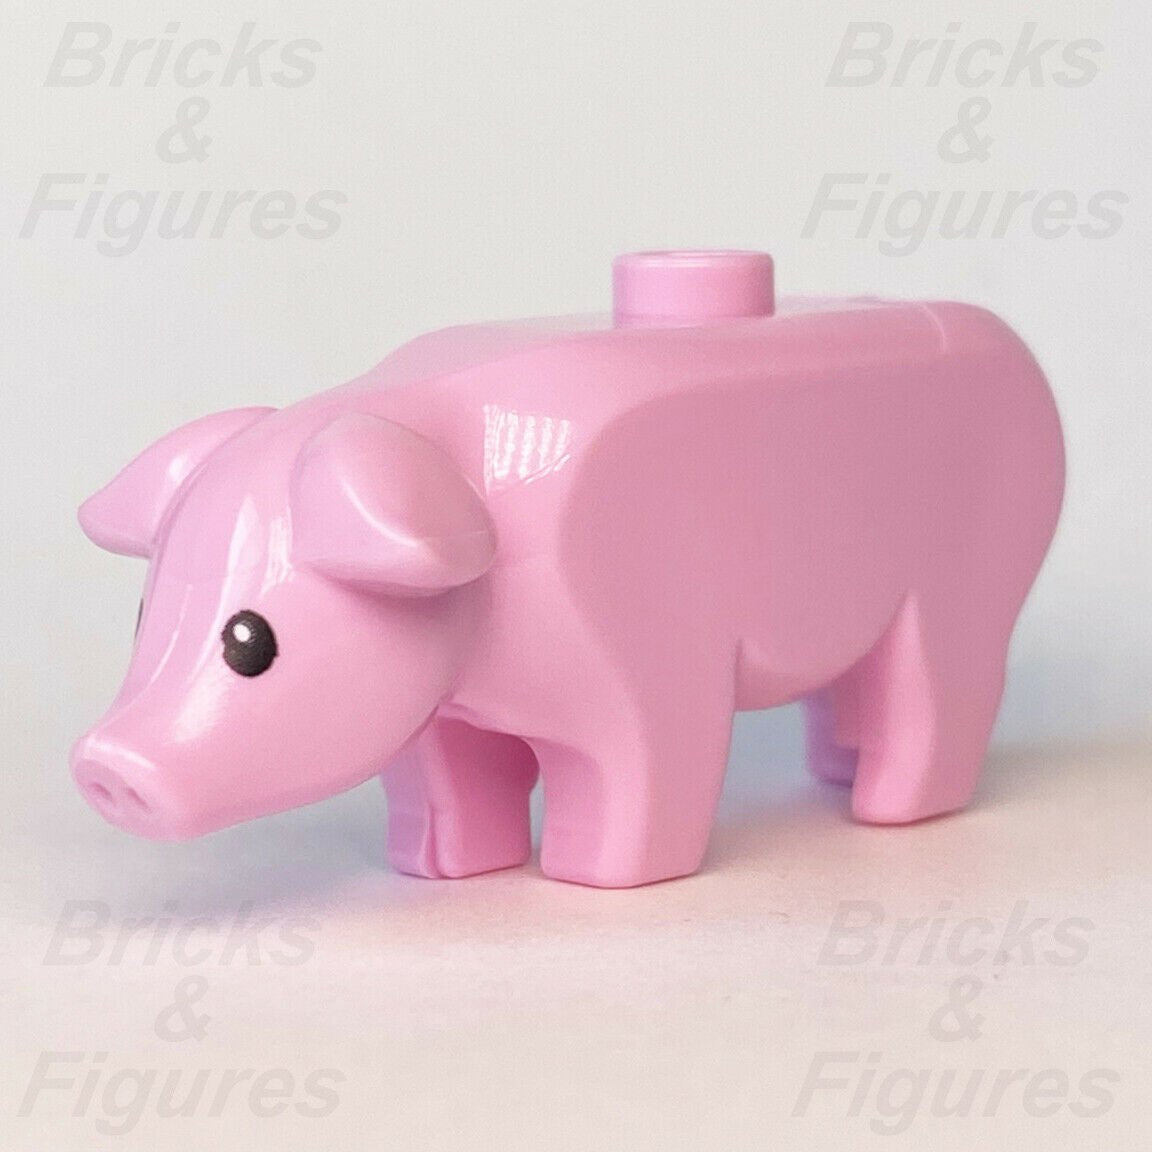 New Ideas/Harry Potter LEGO Bright Pink Pig Animal Part Minifigure 75980 21322 - Bricks & Figures